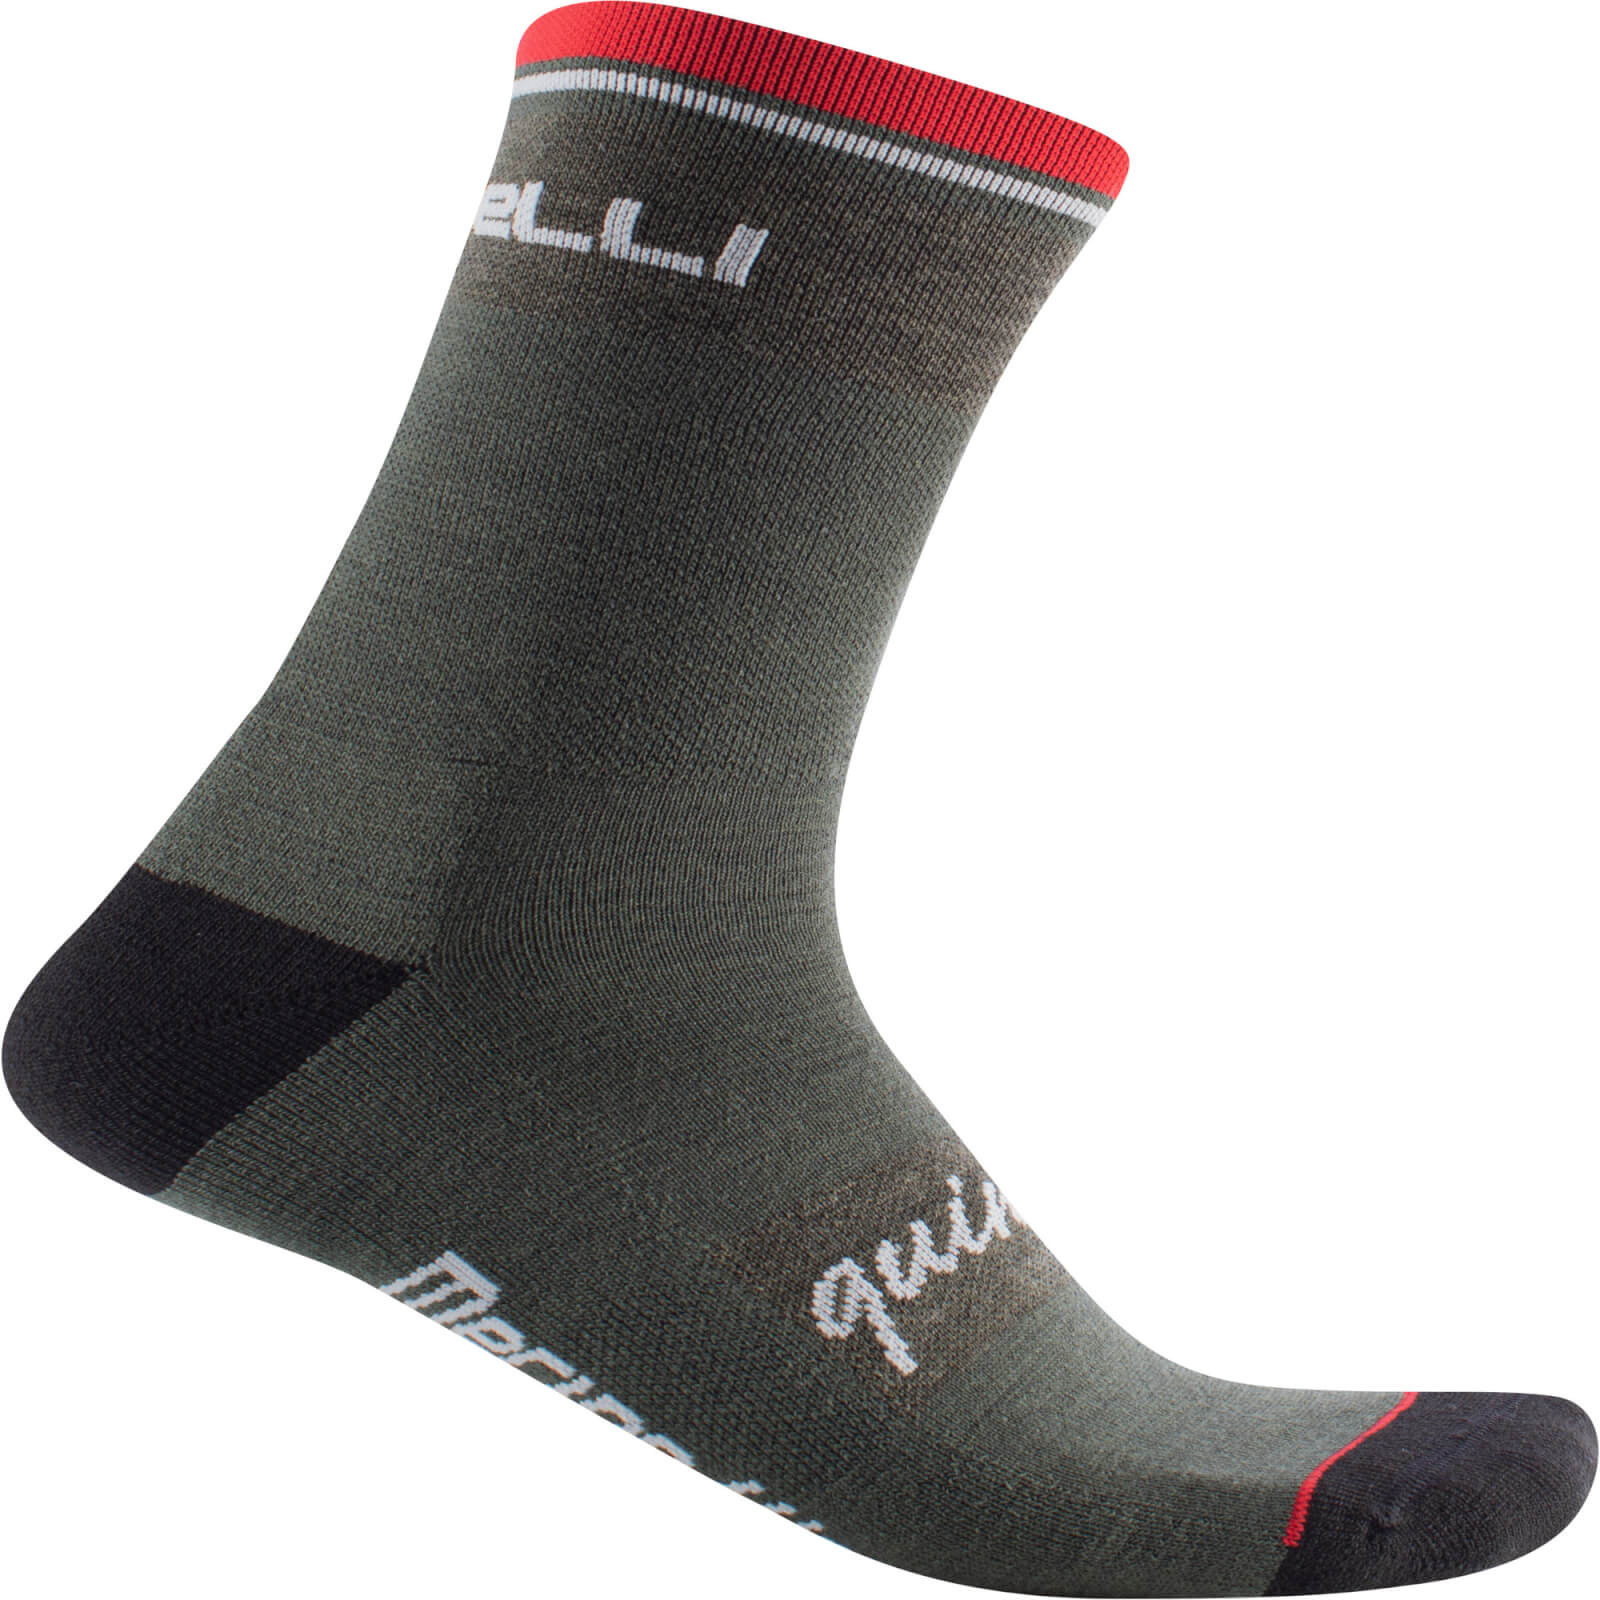 Castelli Quindici Soft Merino Socks - S/M - Dark Green